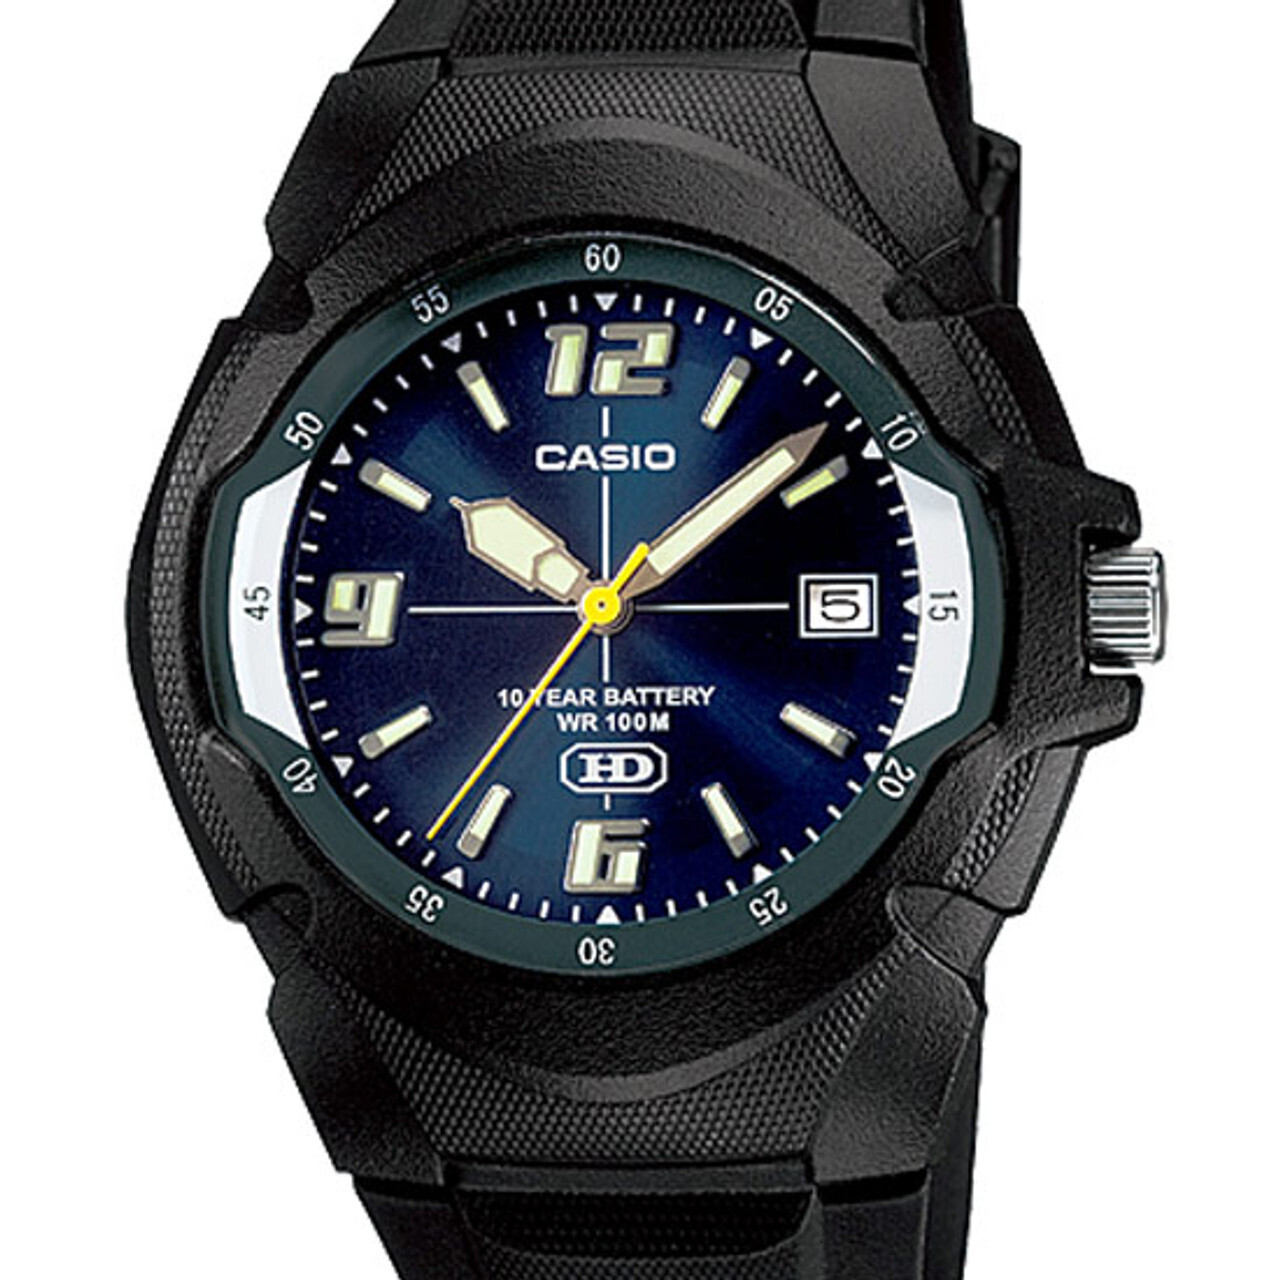 Reloj deportivo clásico hombre Casio MW-600F-2A dial azul correa resina 10 años batería